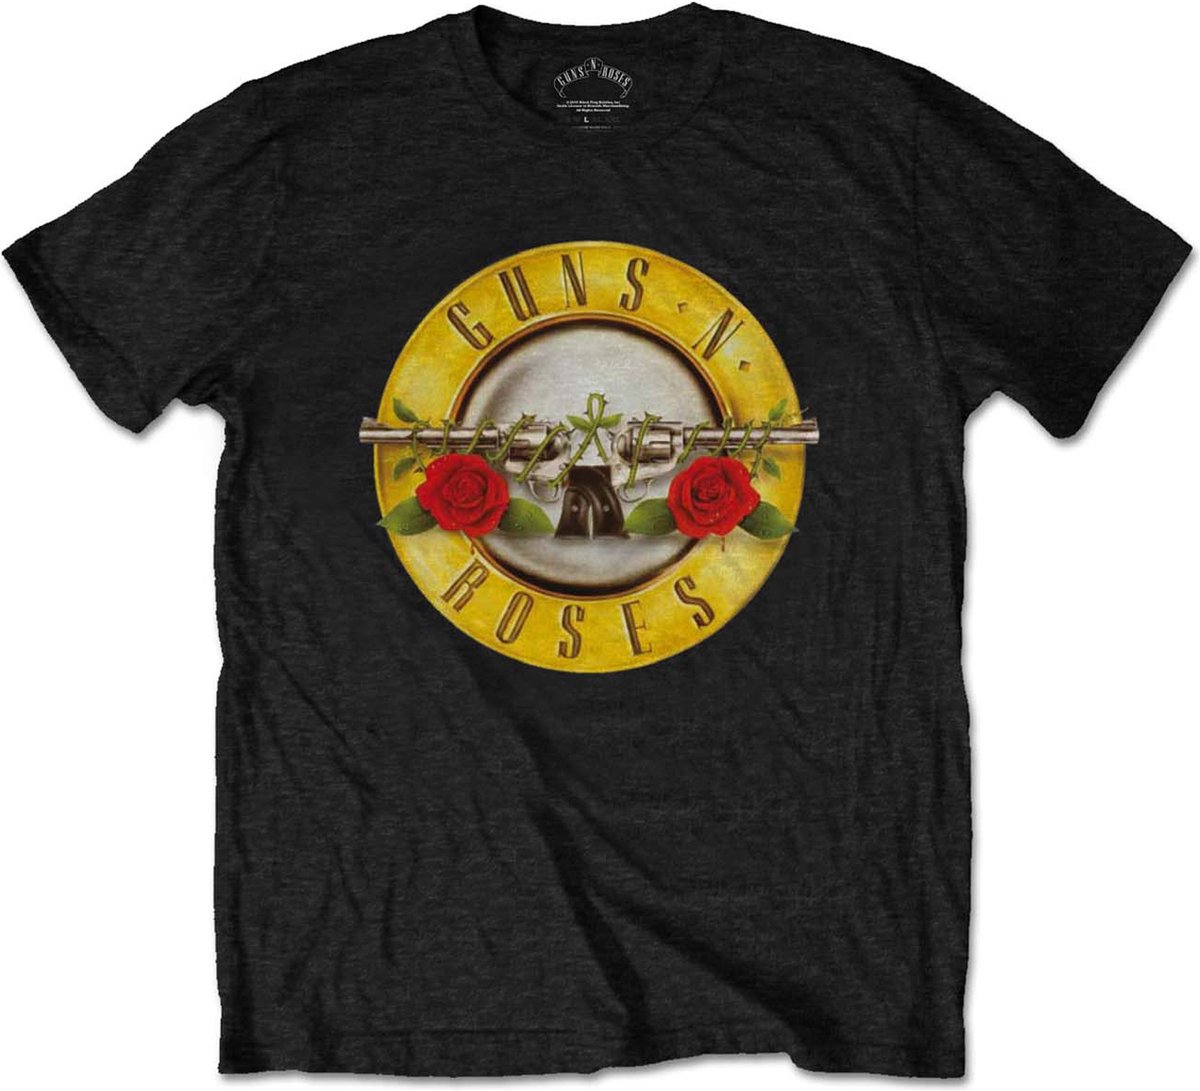 Guns N Roses Classic Logo T-shirt M